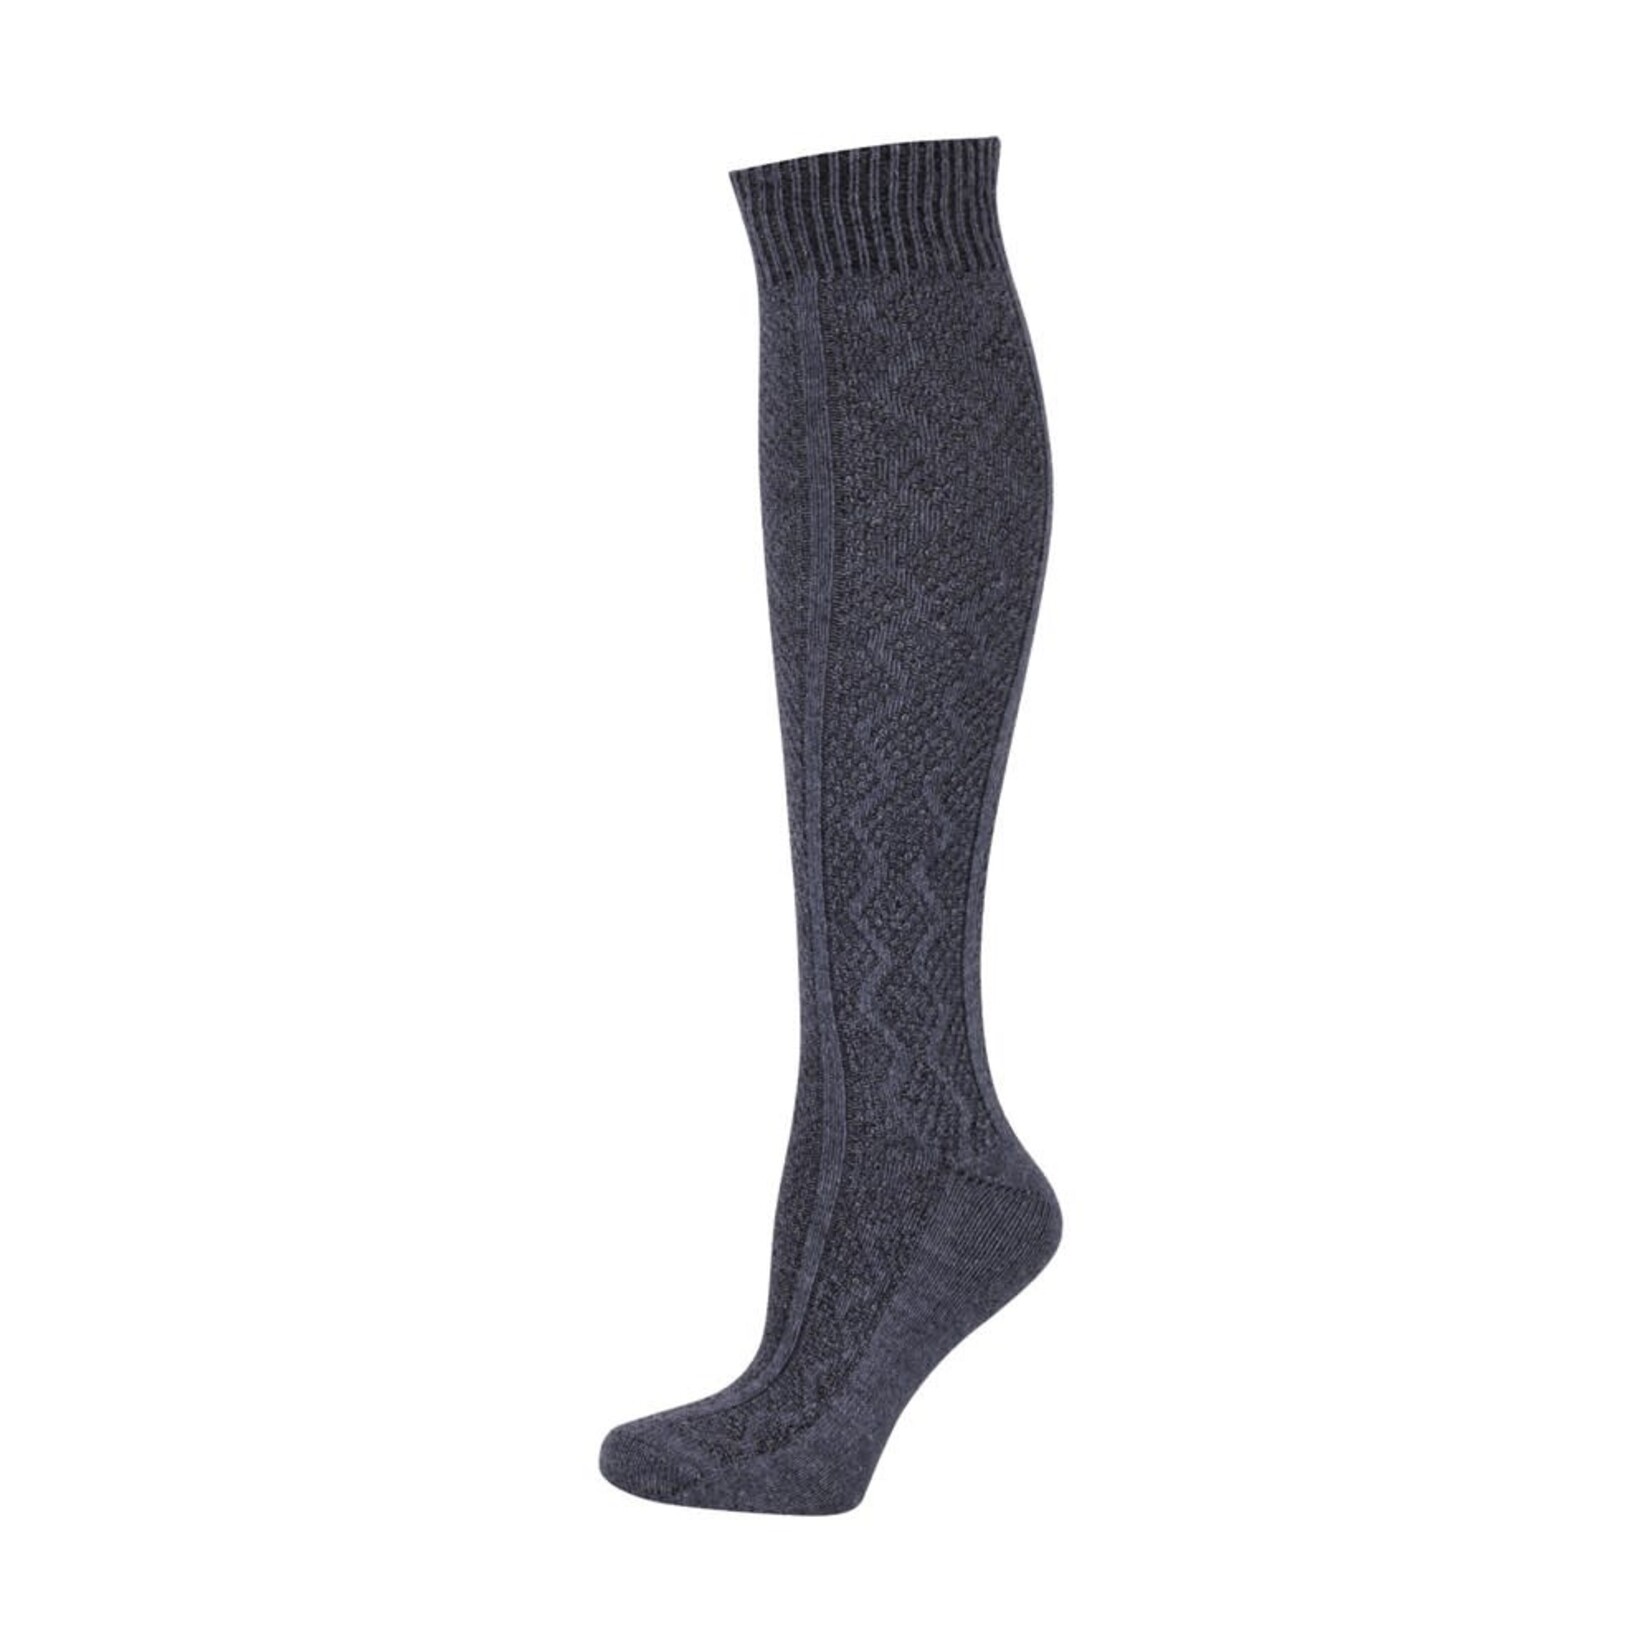 Horze Clara Winter Socks